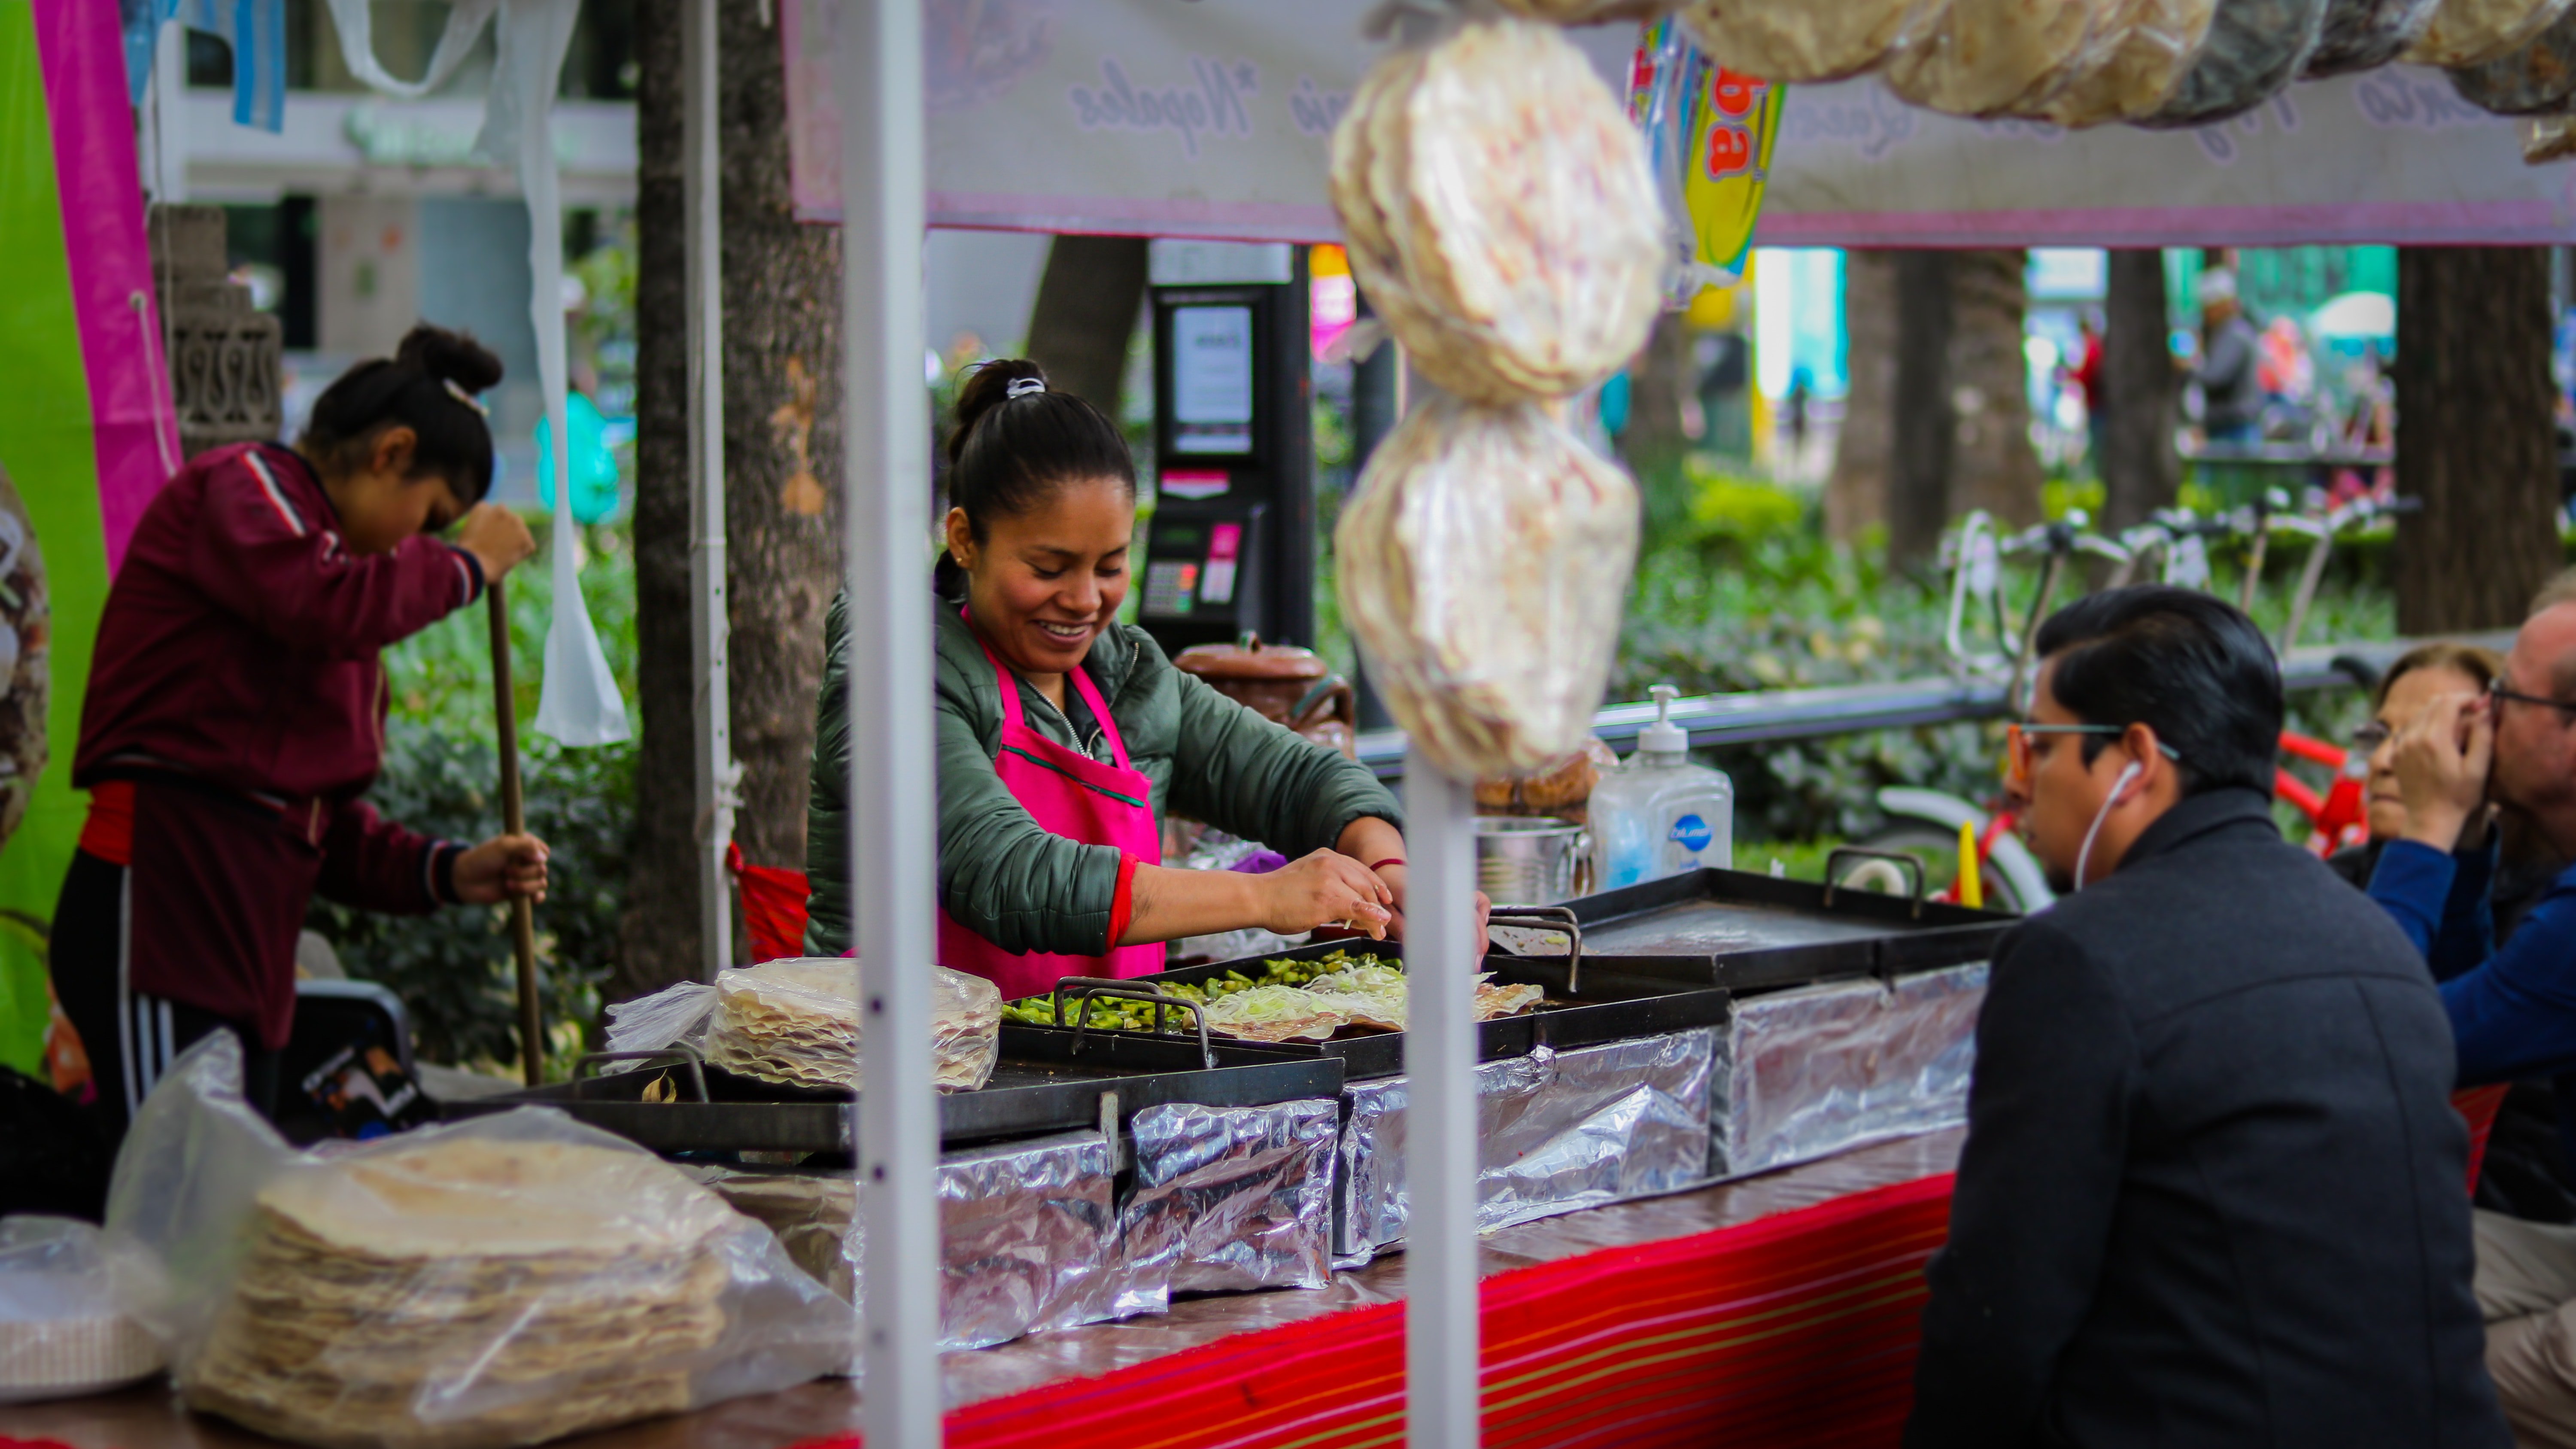 Mexico City Street Food